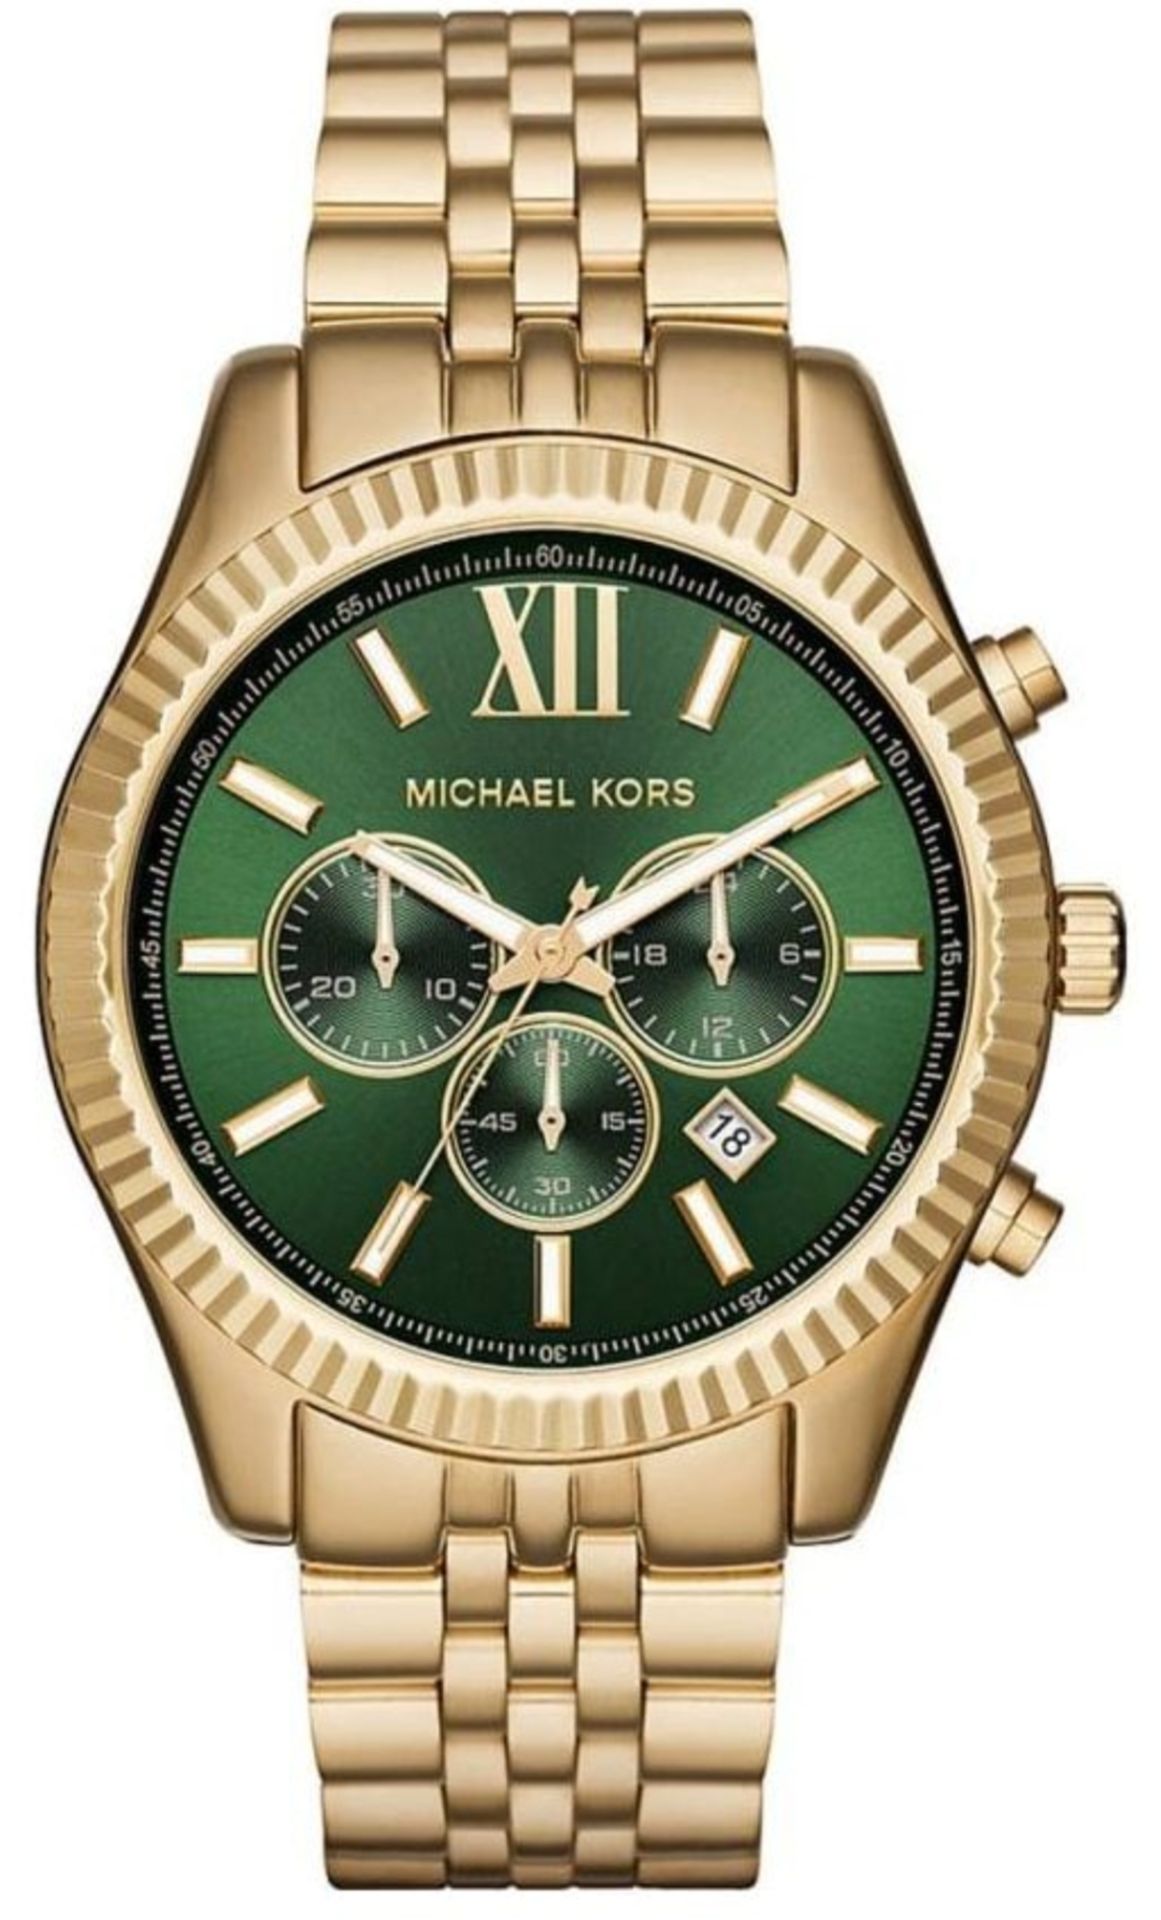 Michael Kors MK8446 Men's Lexington Watch - Image 2 of 8